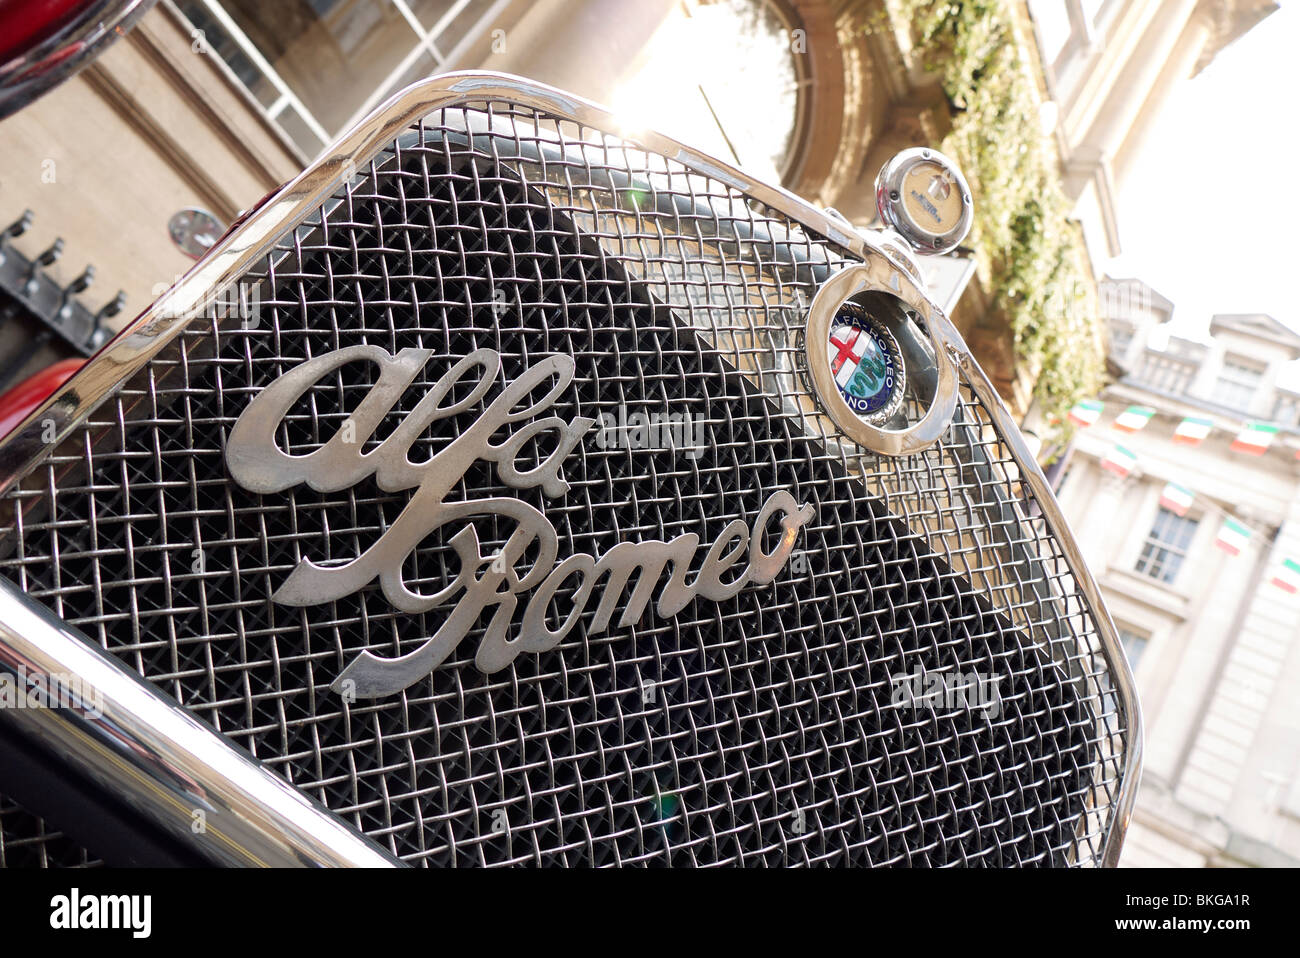 Alfa Romeo Coche Vintage Grill monograma cromado Foto de stock